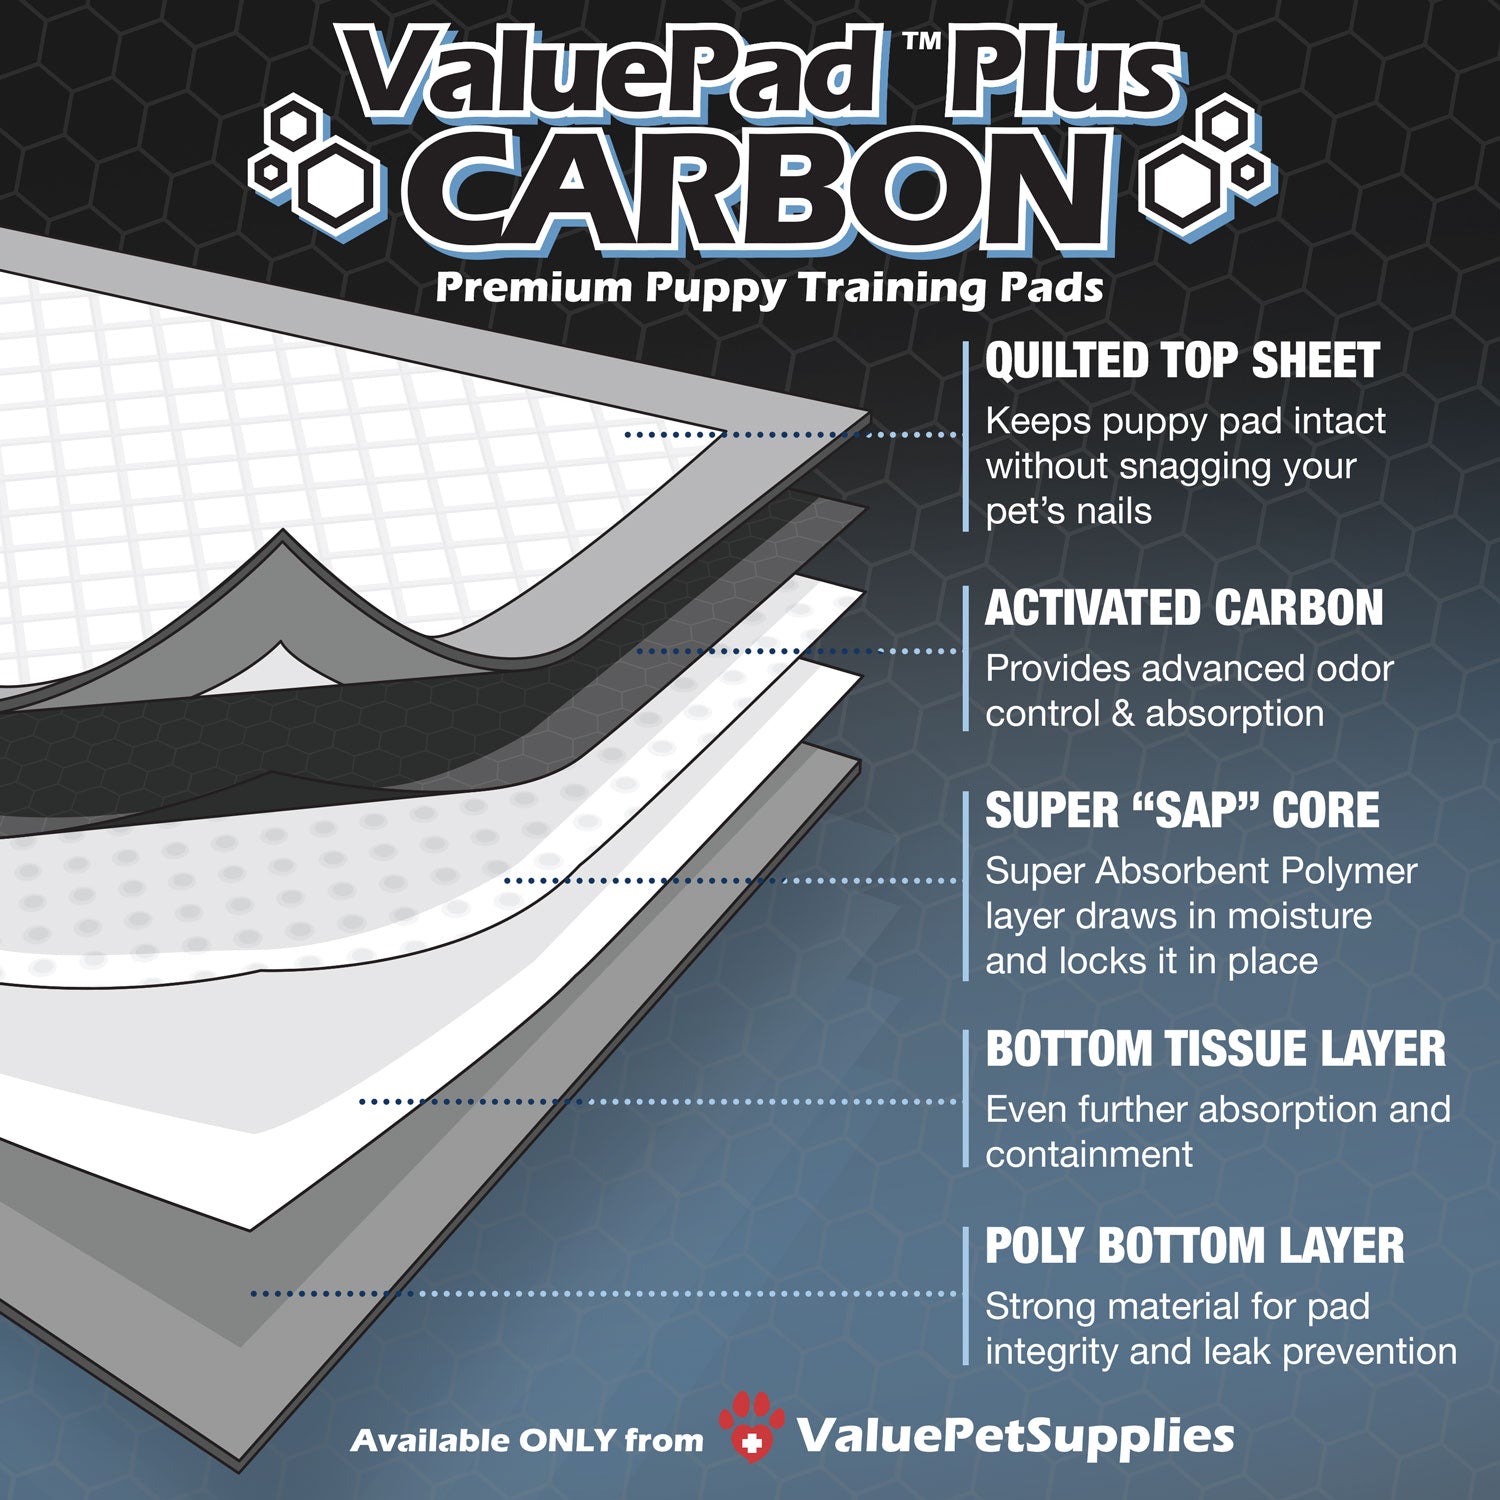 ValuePad Plus Carbon Puppy Pads, XXL Gigantic 28x44 Inch, 400 Count WHOLESALE PACK